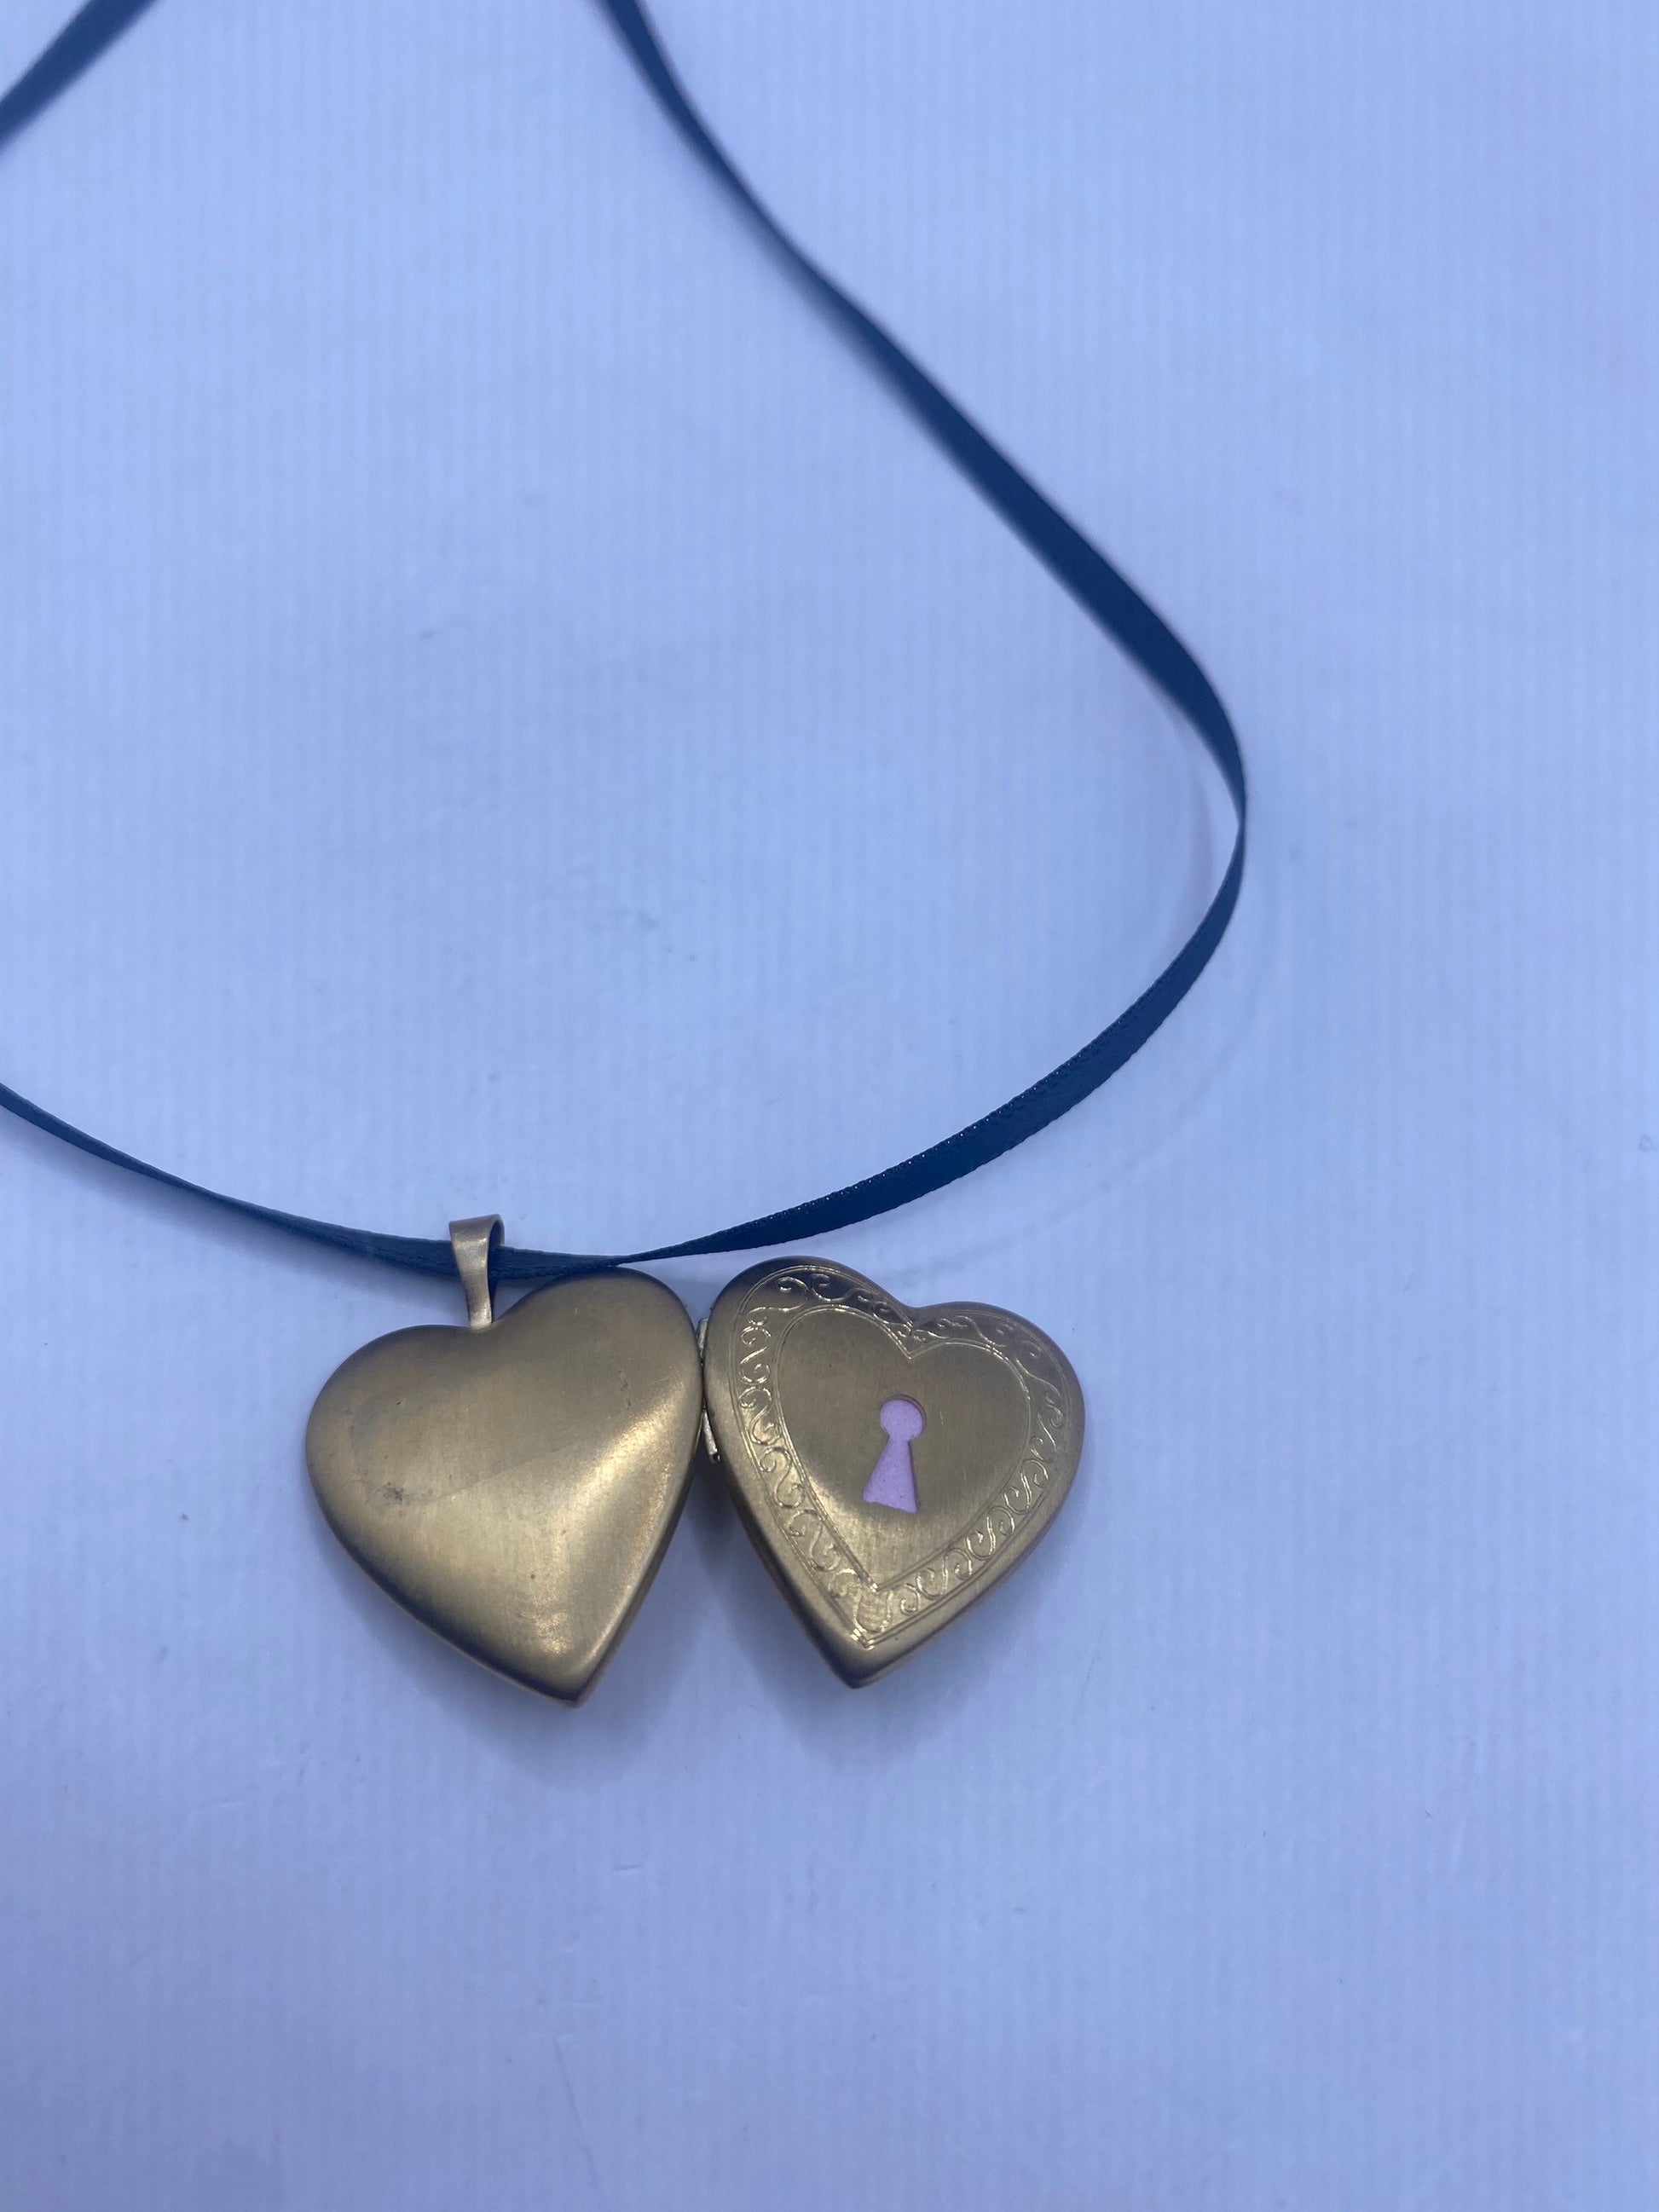 Vintage Gold Locket | Tiny Heart 9k Gold Filled Pendant Photo Memory Charm Engraved Keyhole Key To My Heart | Choker Necklace